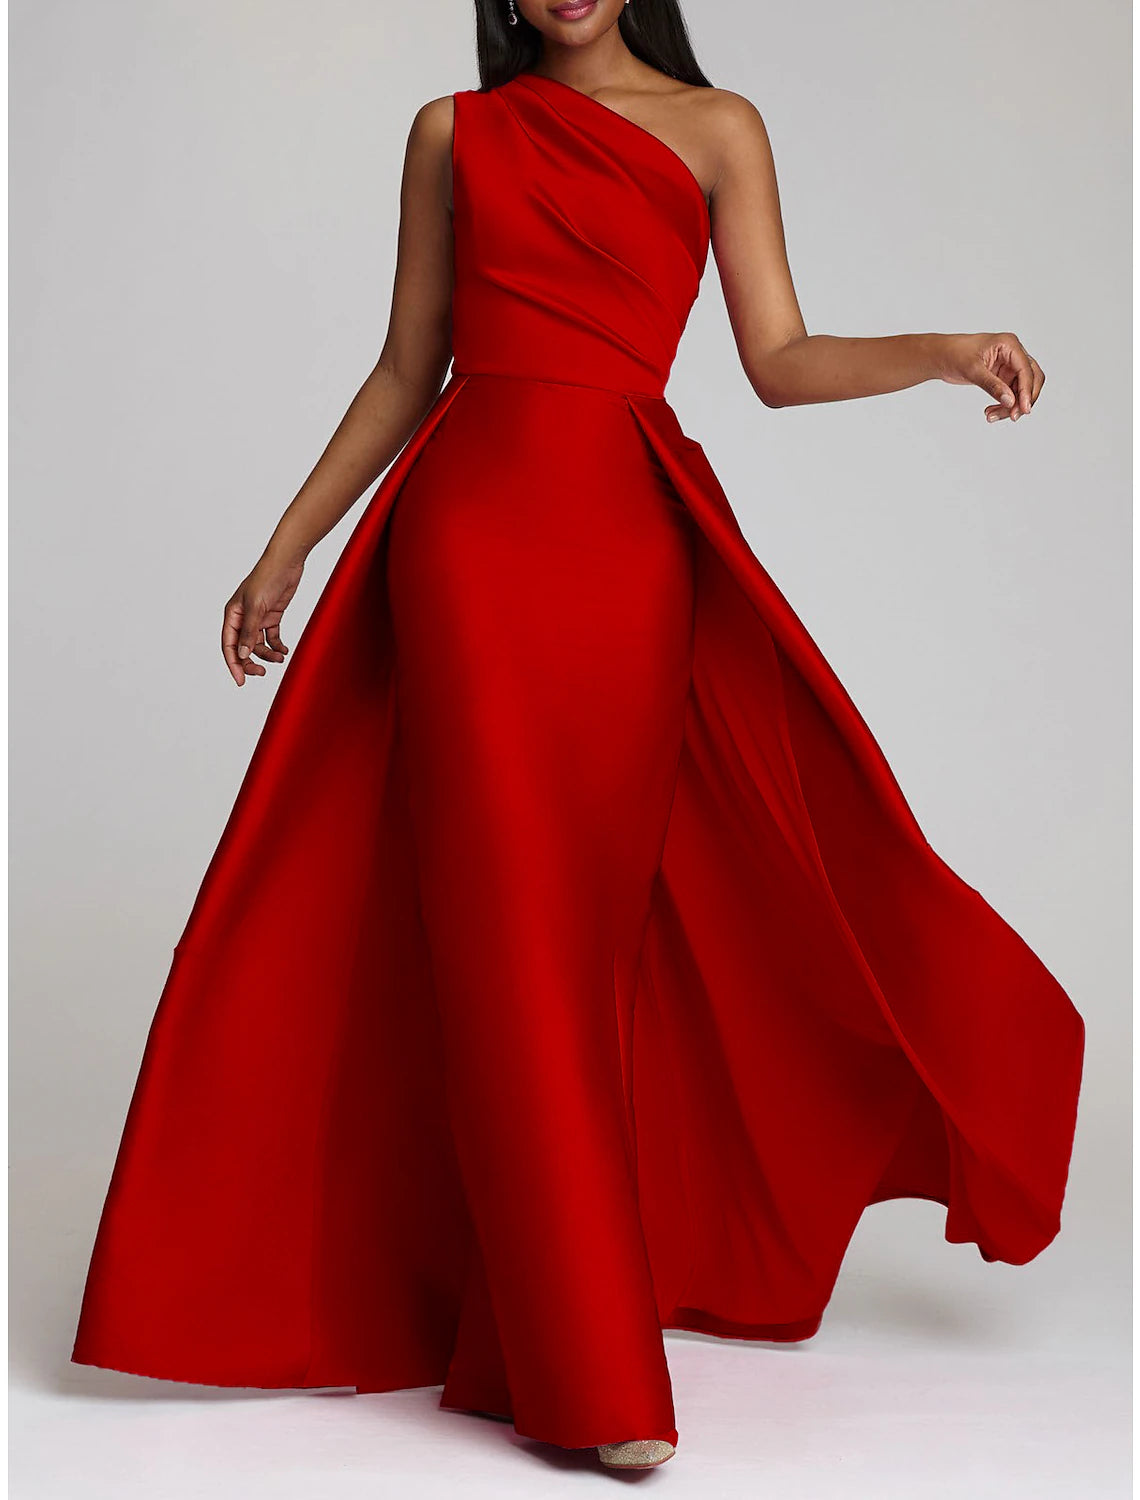 Sheath Red Green Dress Evening Gown Hot Pink Dress Wedding Guest Floor Length Sleeveless One Shoulder Satin with Overskirt